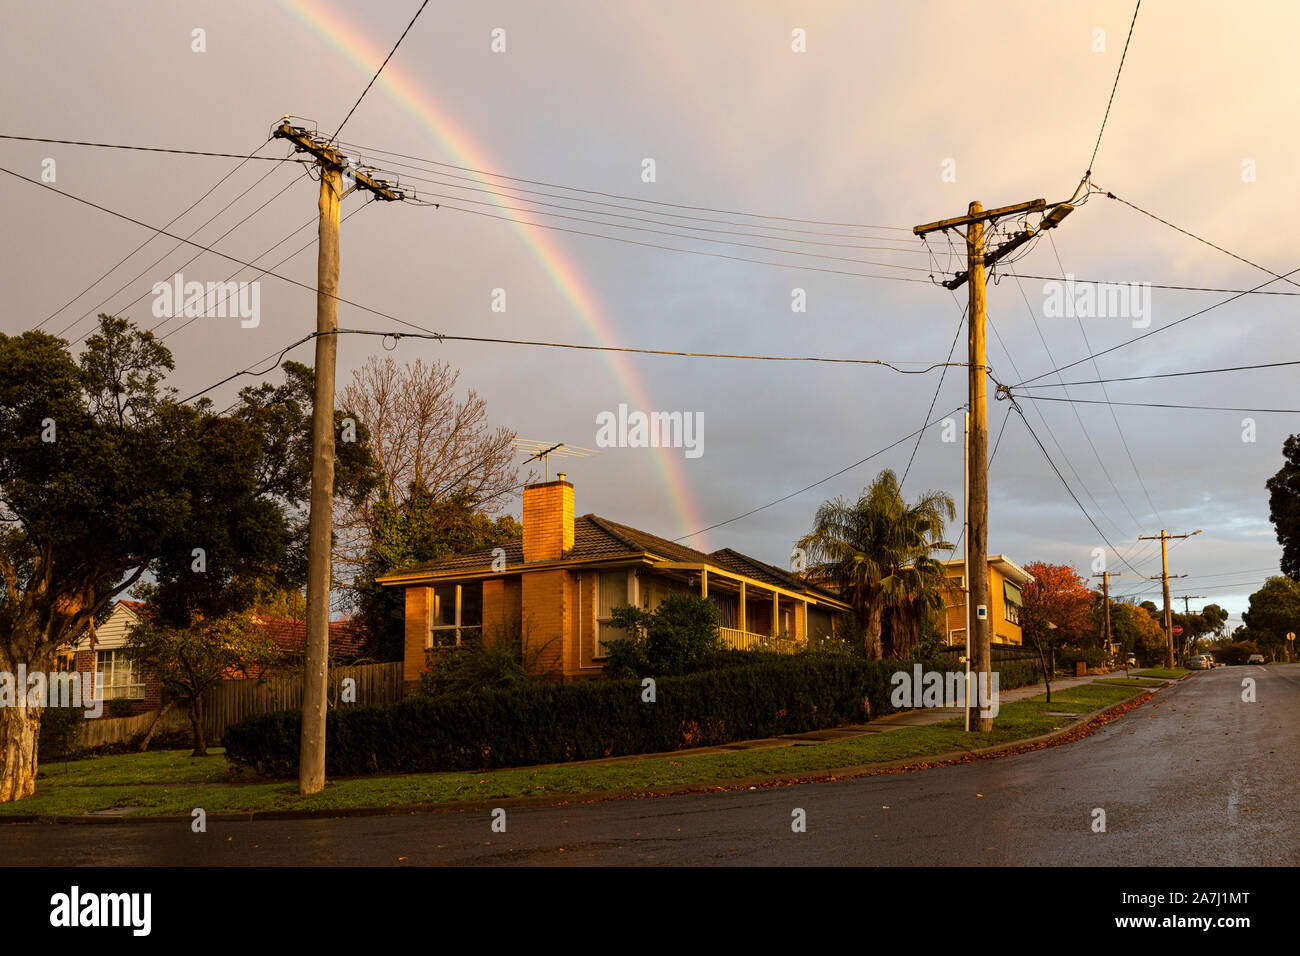 Suburban area street with rainbow pointing straight through frames center. Stock Photo